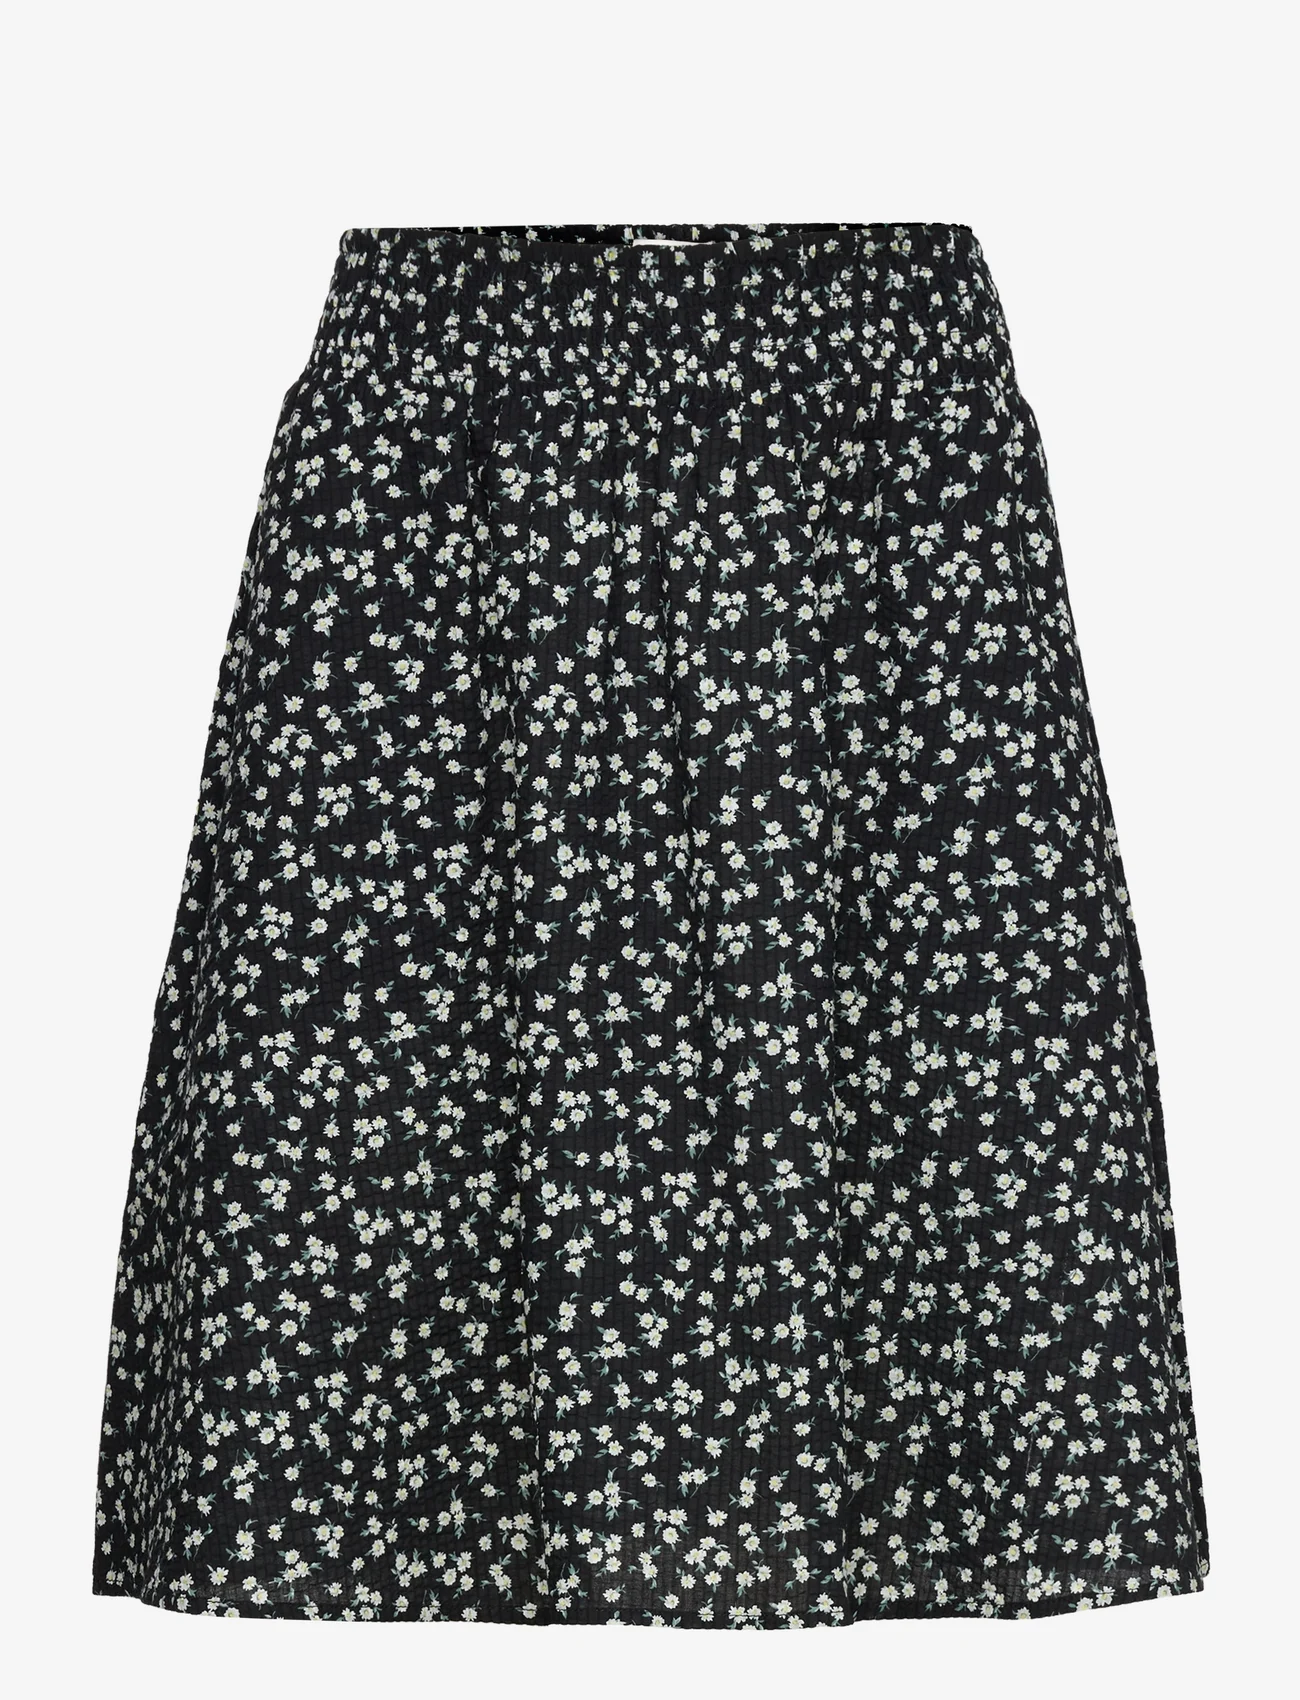 NORR - Opal seersucker skirt - midi skirts - black flower aop - 0